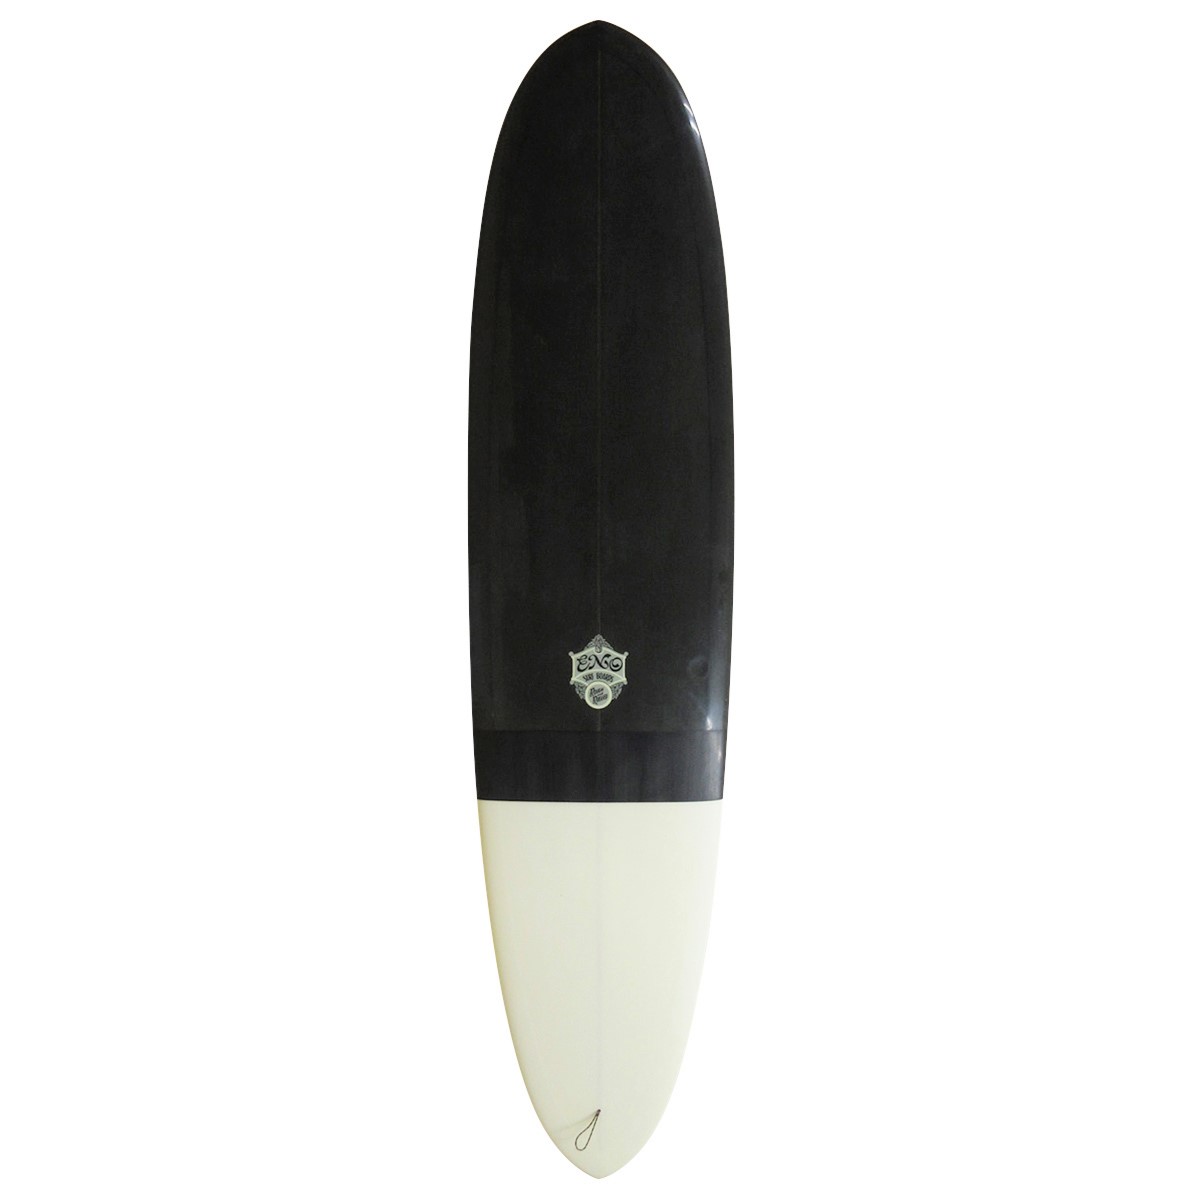 ENO SURFBOARDS / MINI NOSERIDER 8`0